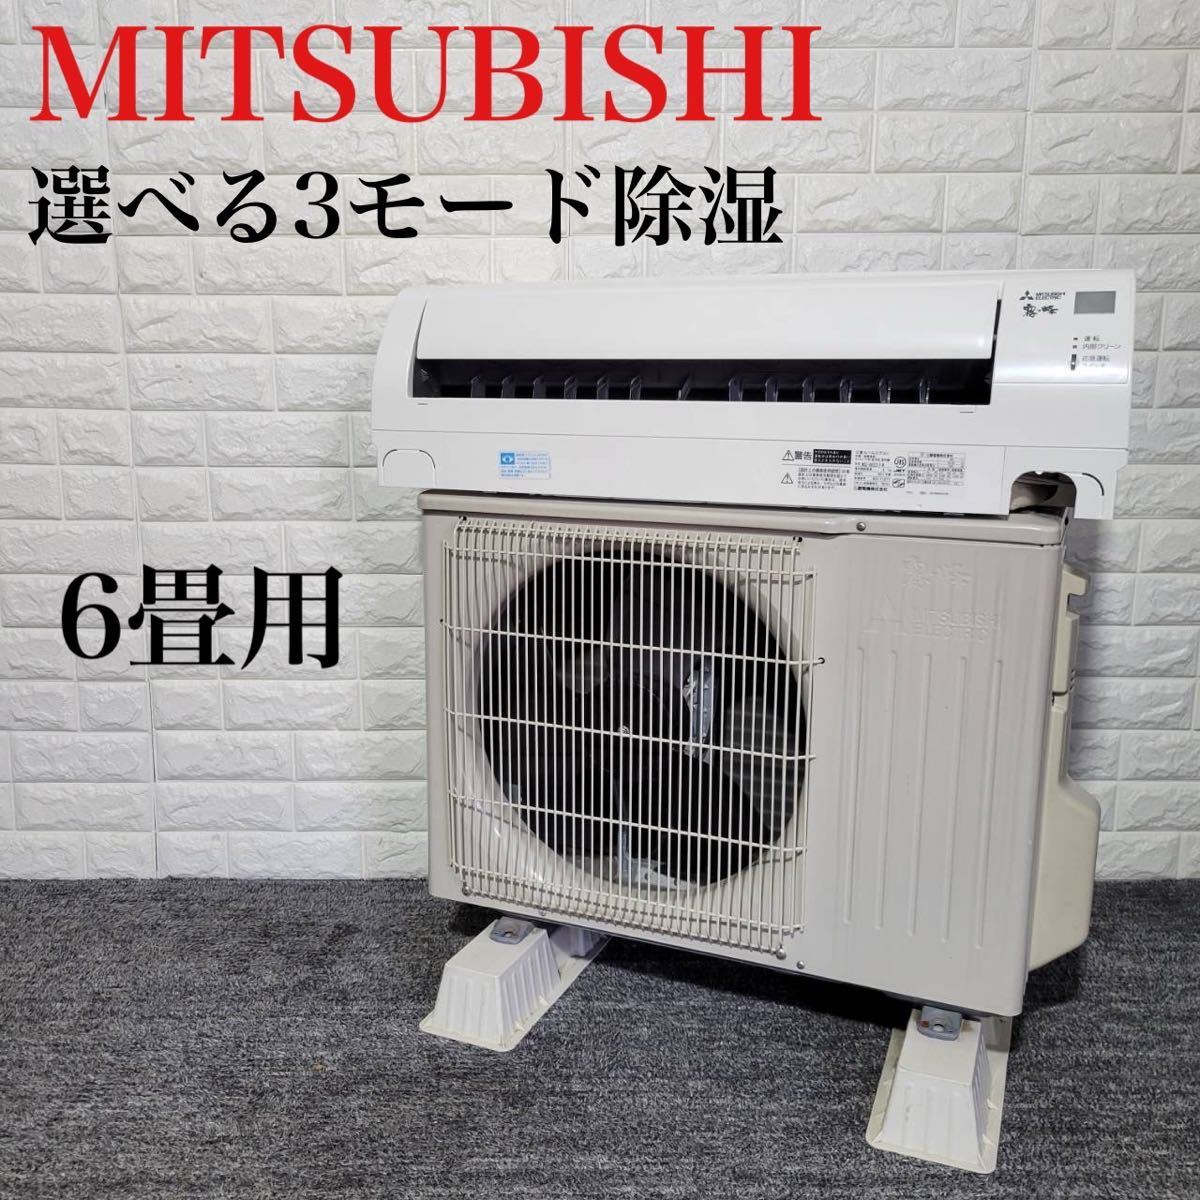 MITSUBISHI エアコン MSZ-GV2217-W 6畳用 家電B076